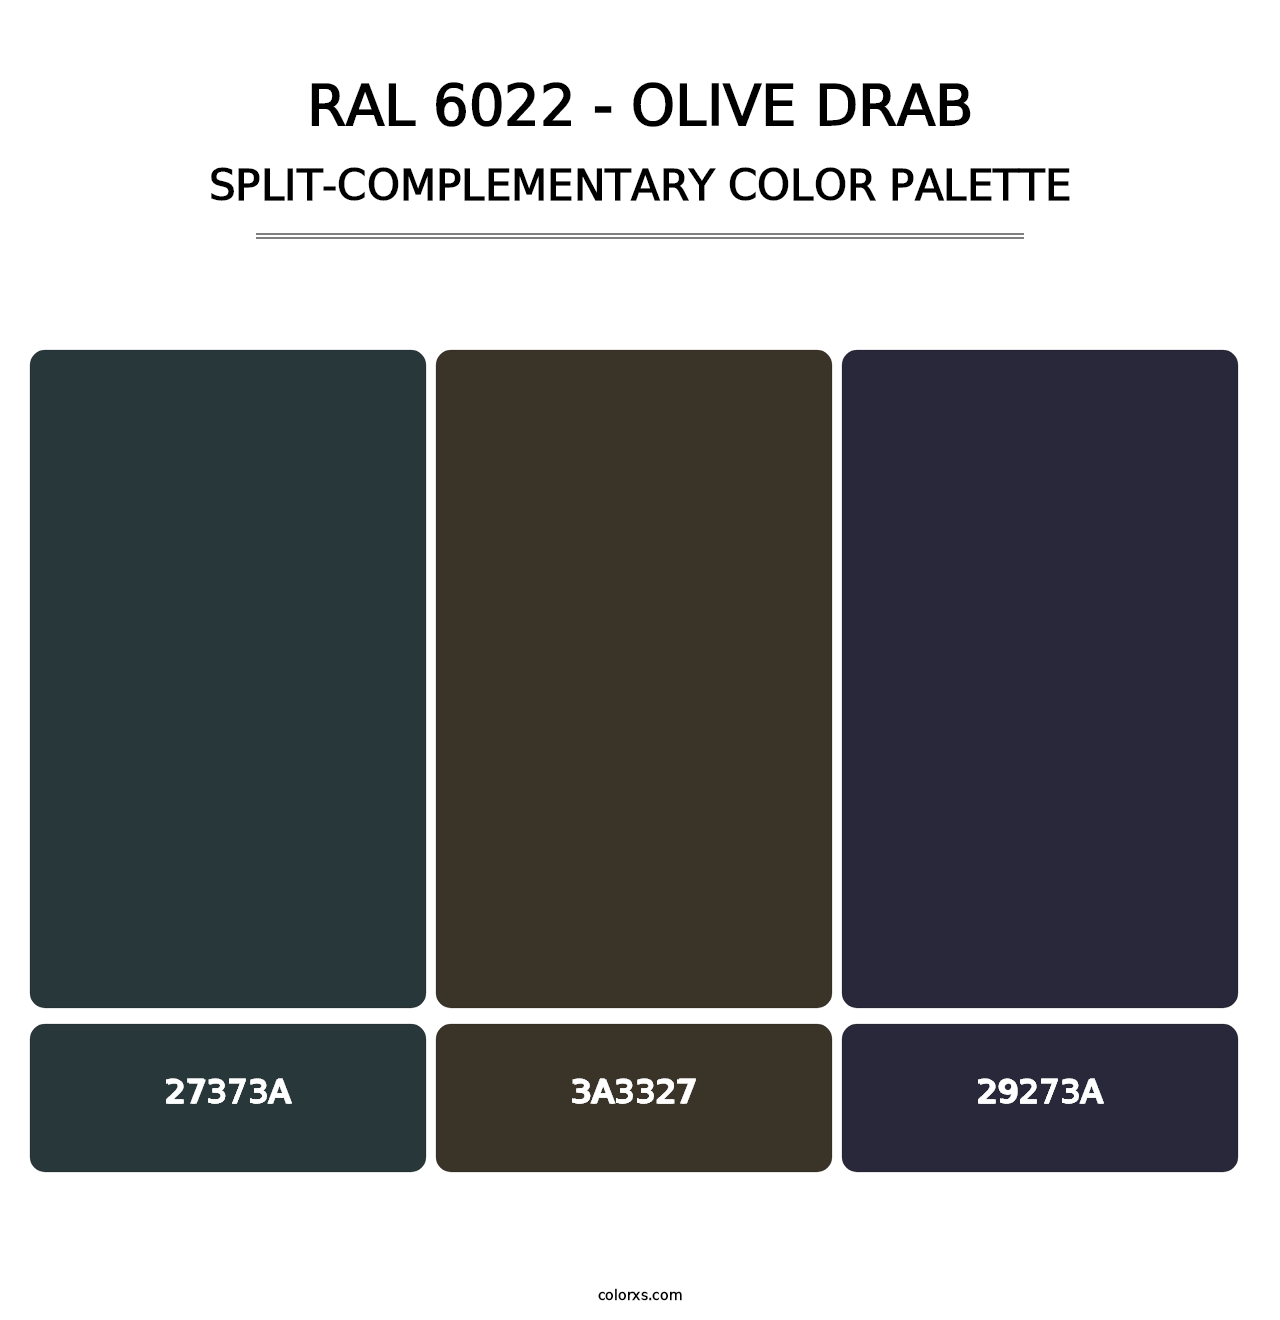 RAL 6022 - Olive Drab - Split-Complementary Color Palette